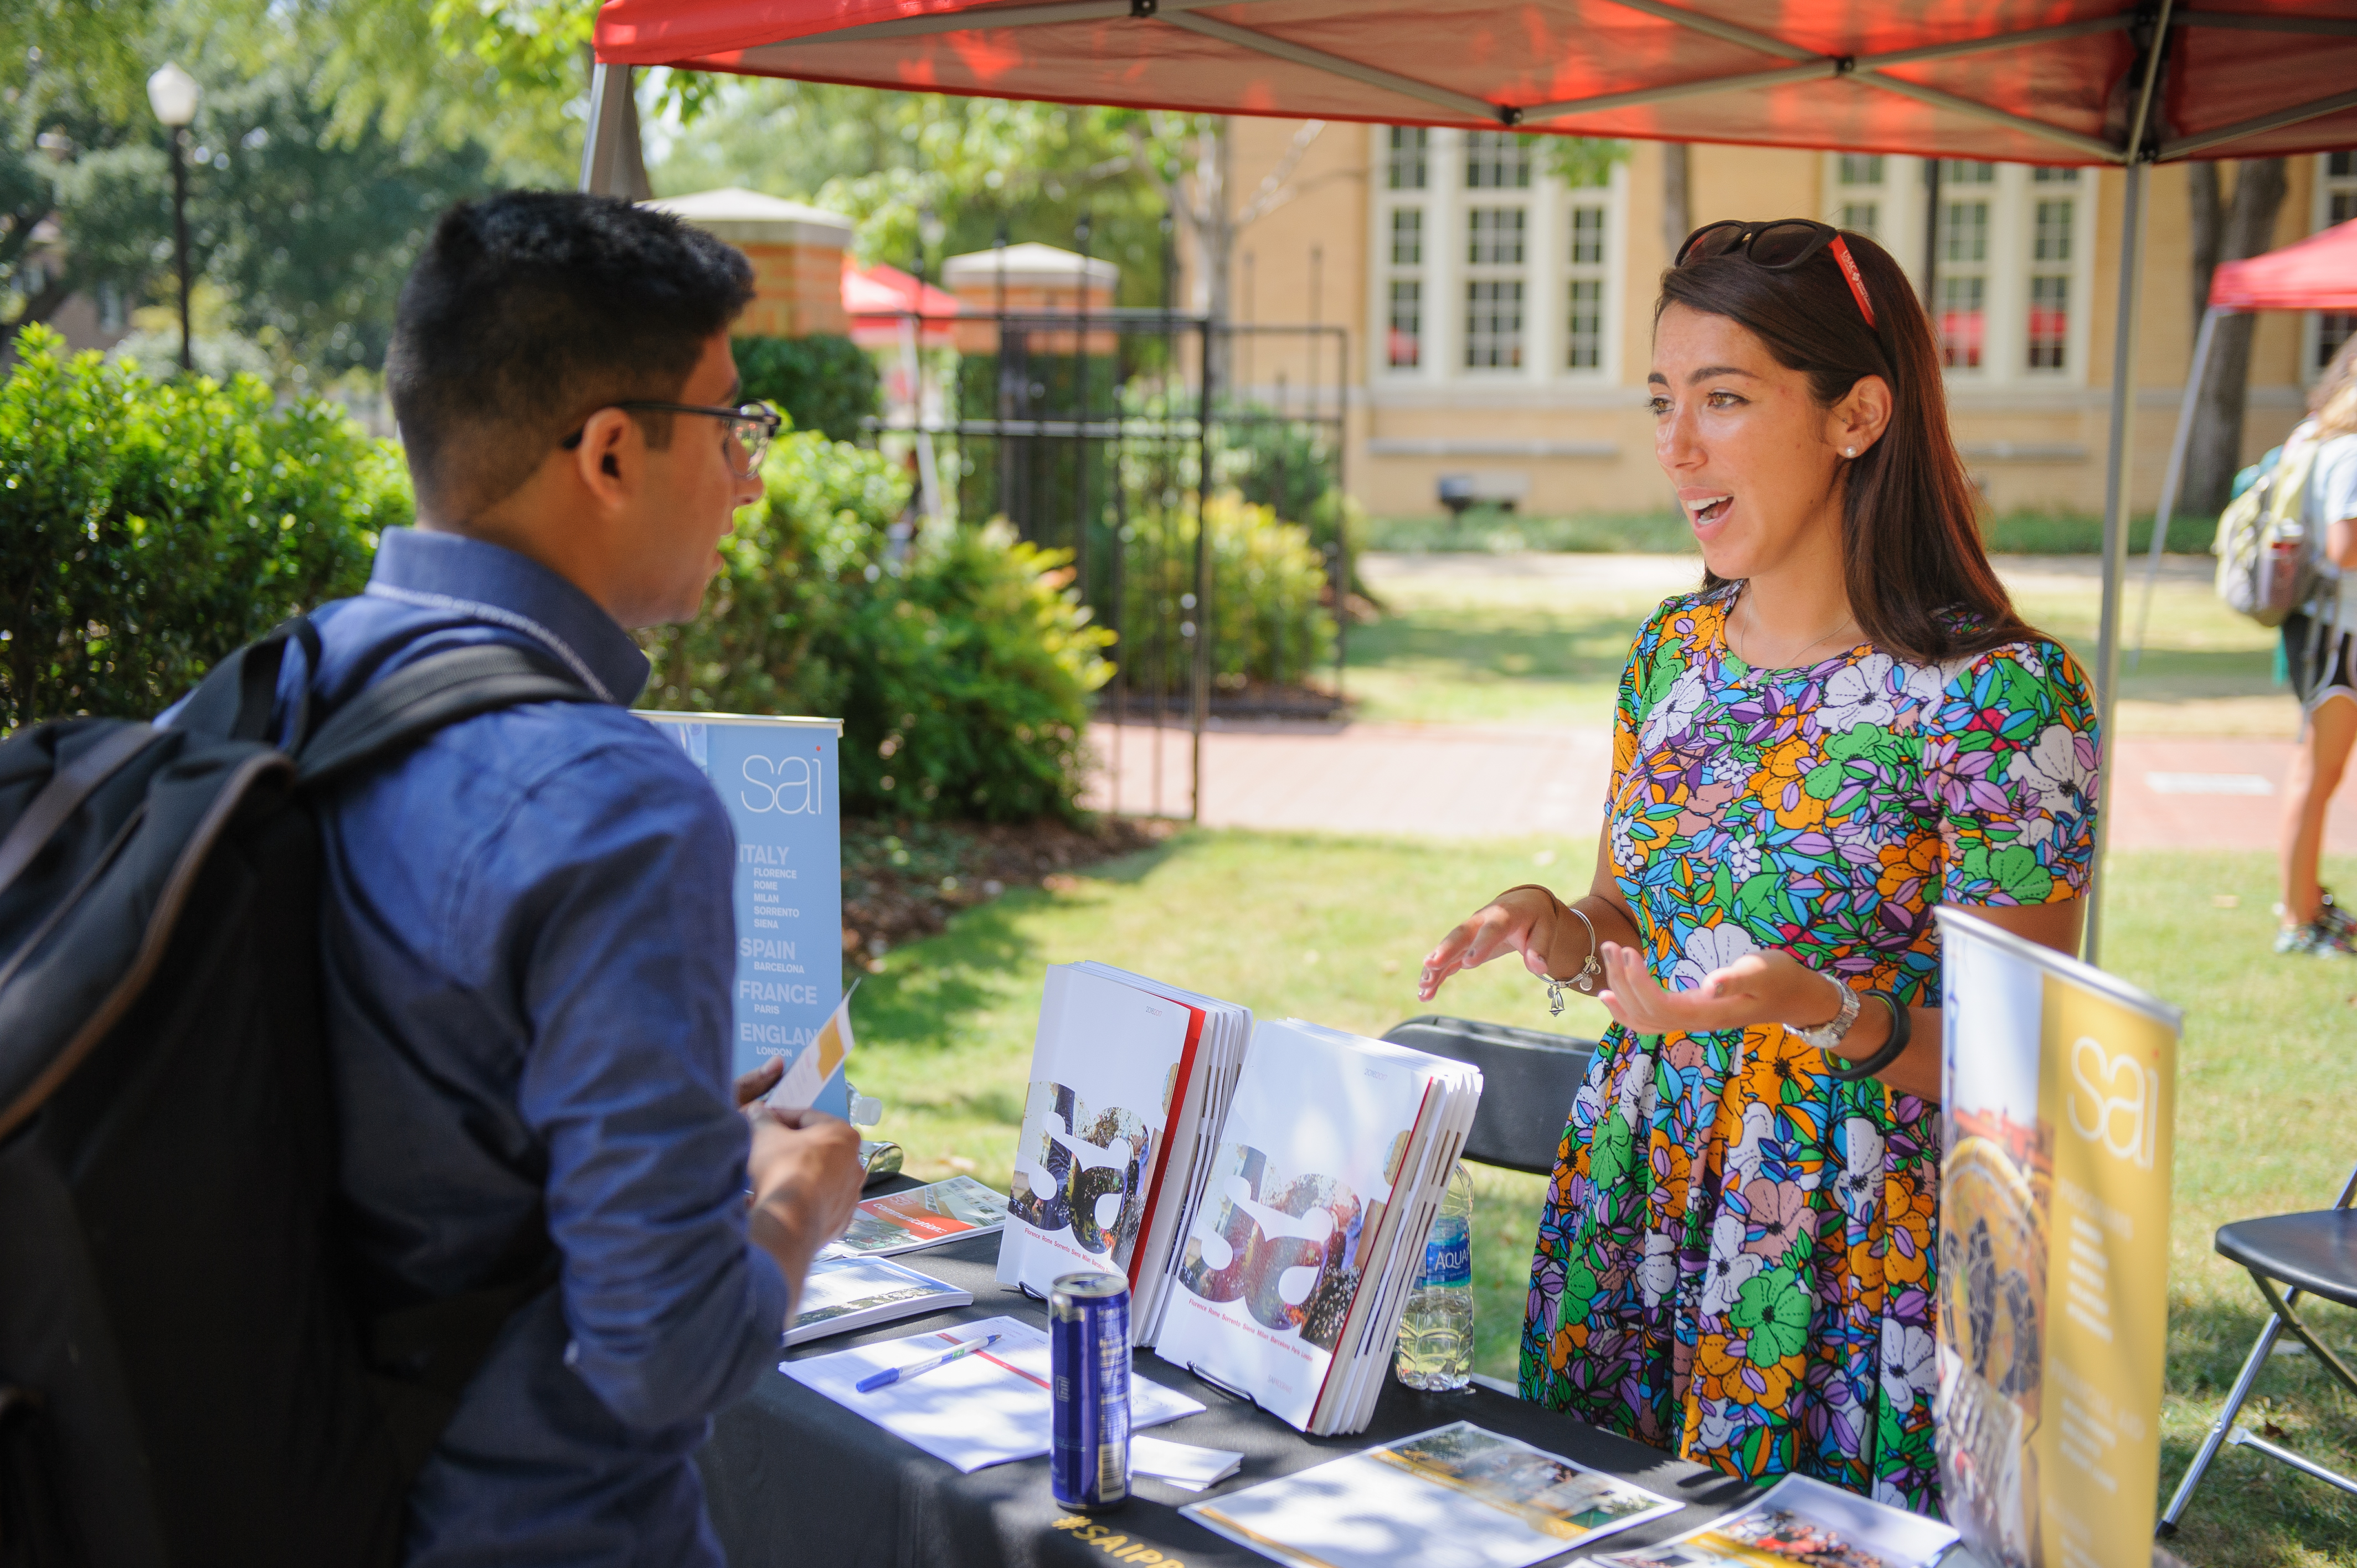 UA Education Abroad holds Study Abroad Fair